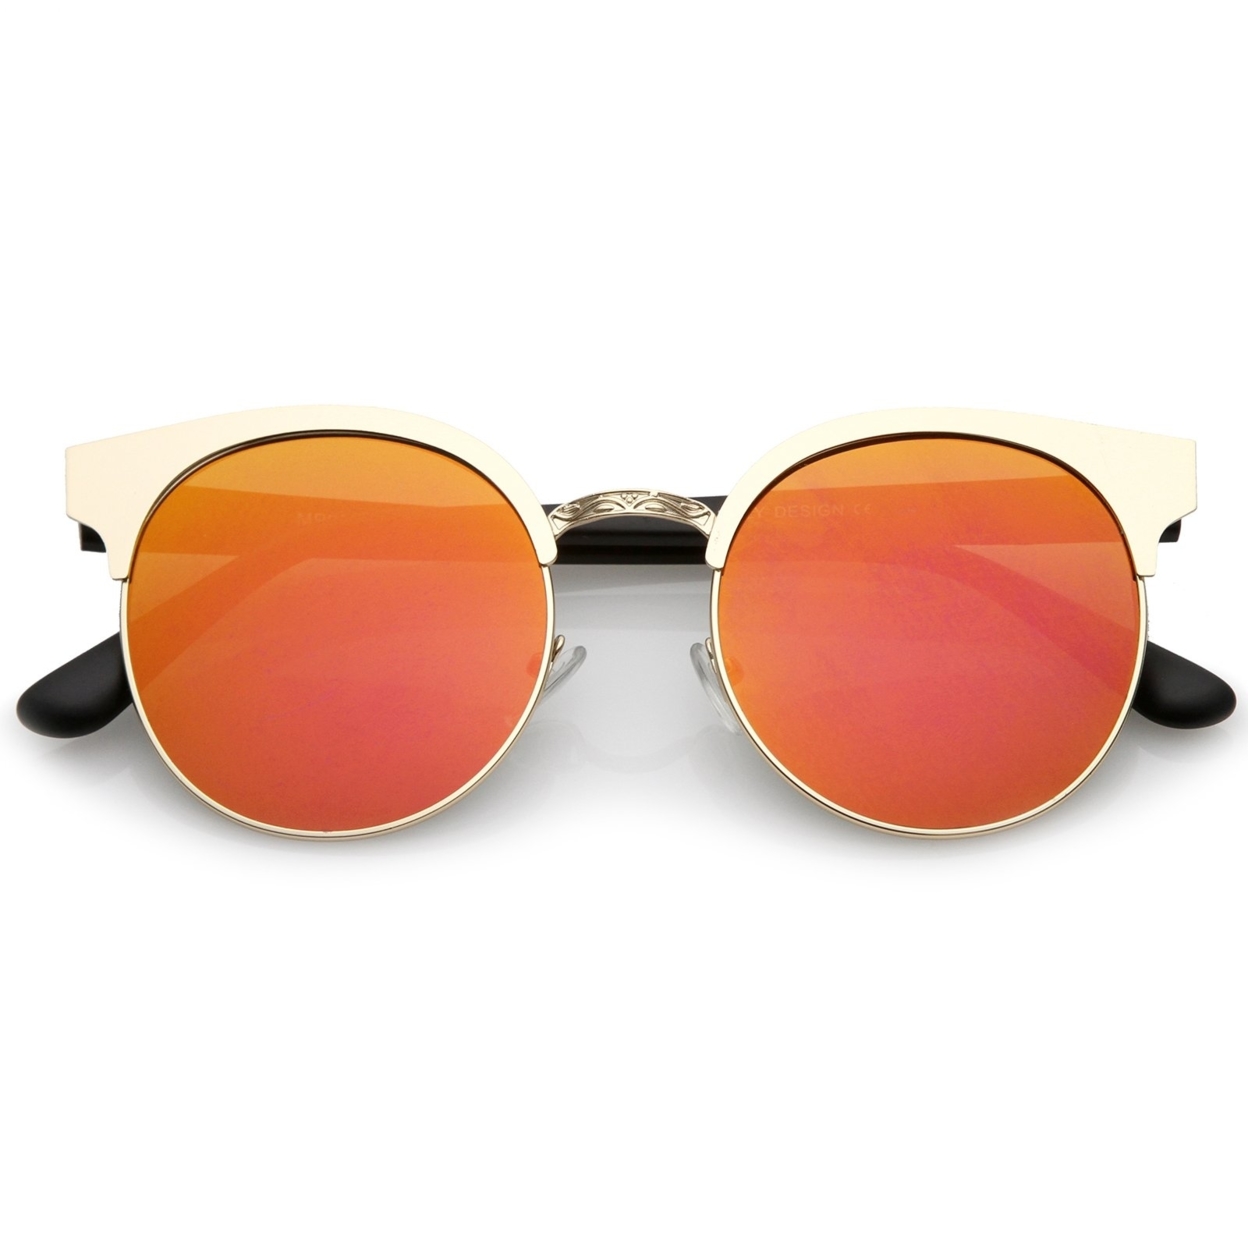 Modern Horn Rimmed Colored Mirror Flat Round Lens Half Frame Sunglasses 52mm - Gold / Magenta-Orange Mirror